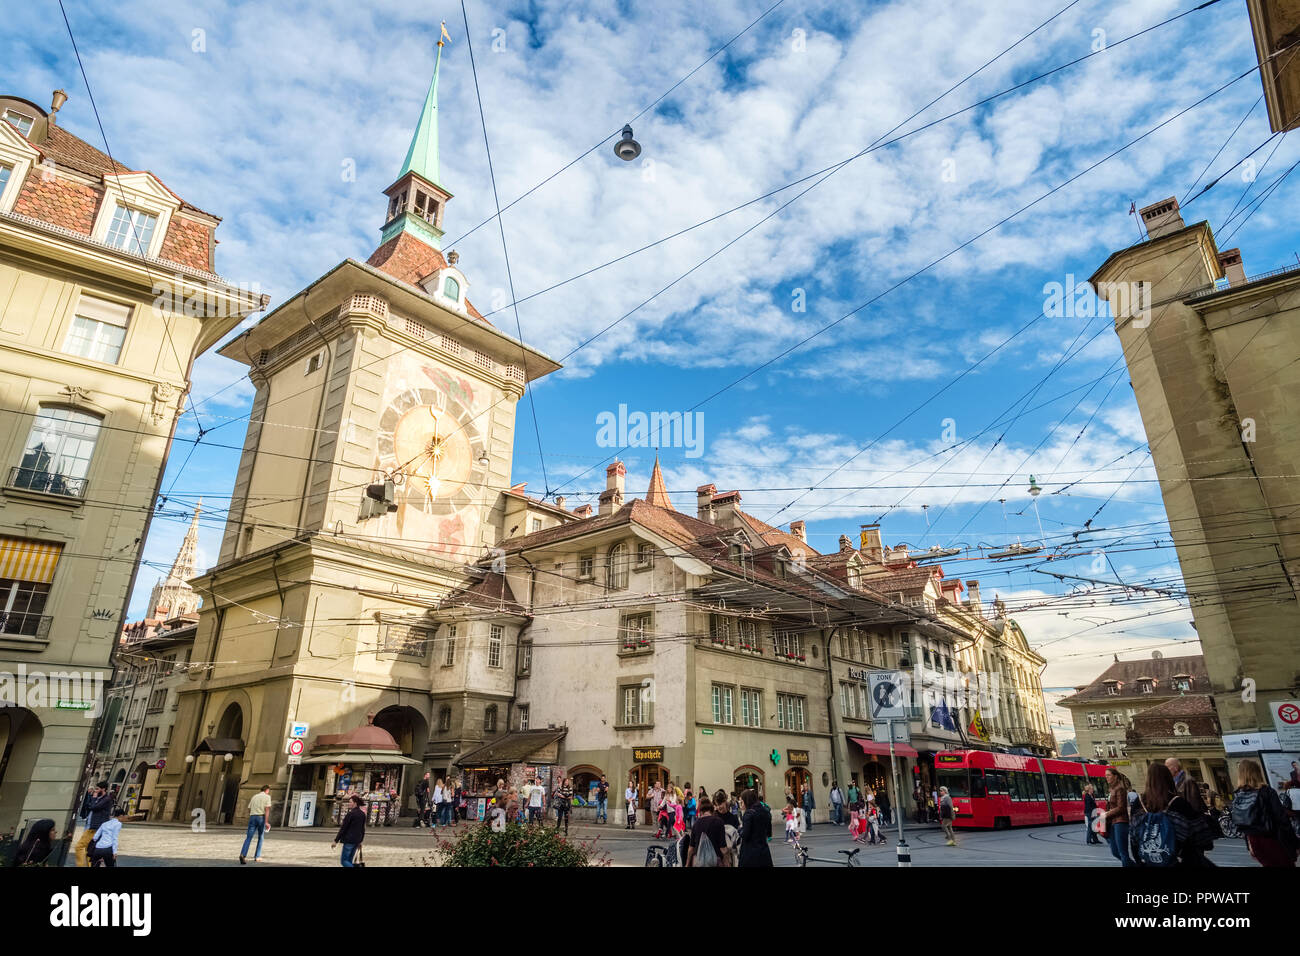 Bern, Switzerland - September 16, 2015: The famous Clock Tower (Zeitglockenturm) of Bern, Switzerland. Photo taken in the Marktgasse in Bern Stock Photo